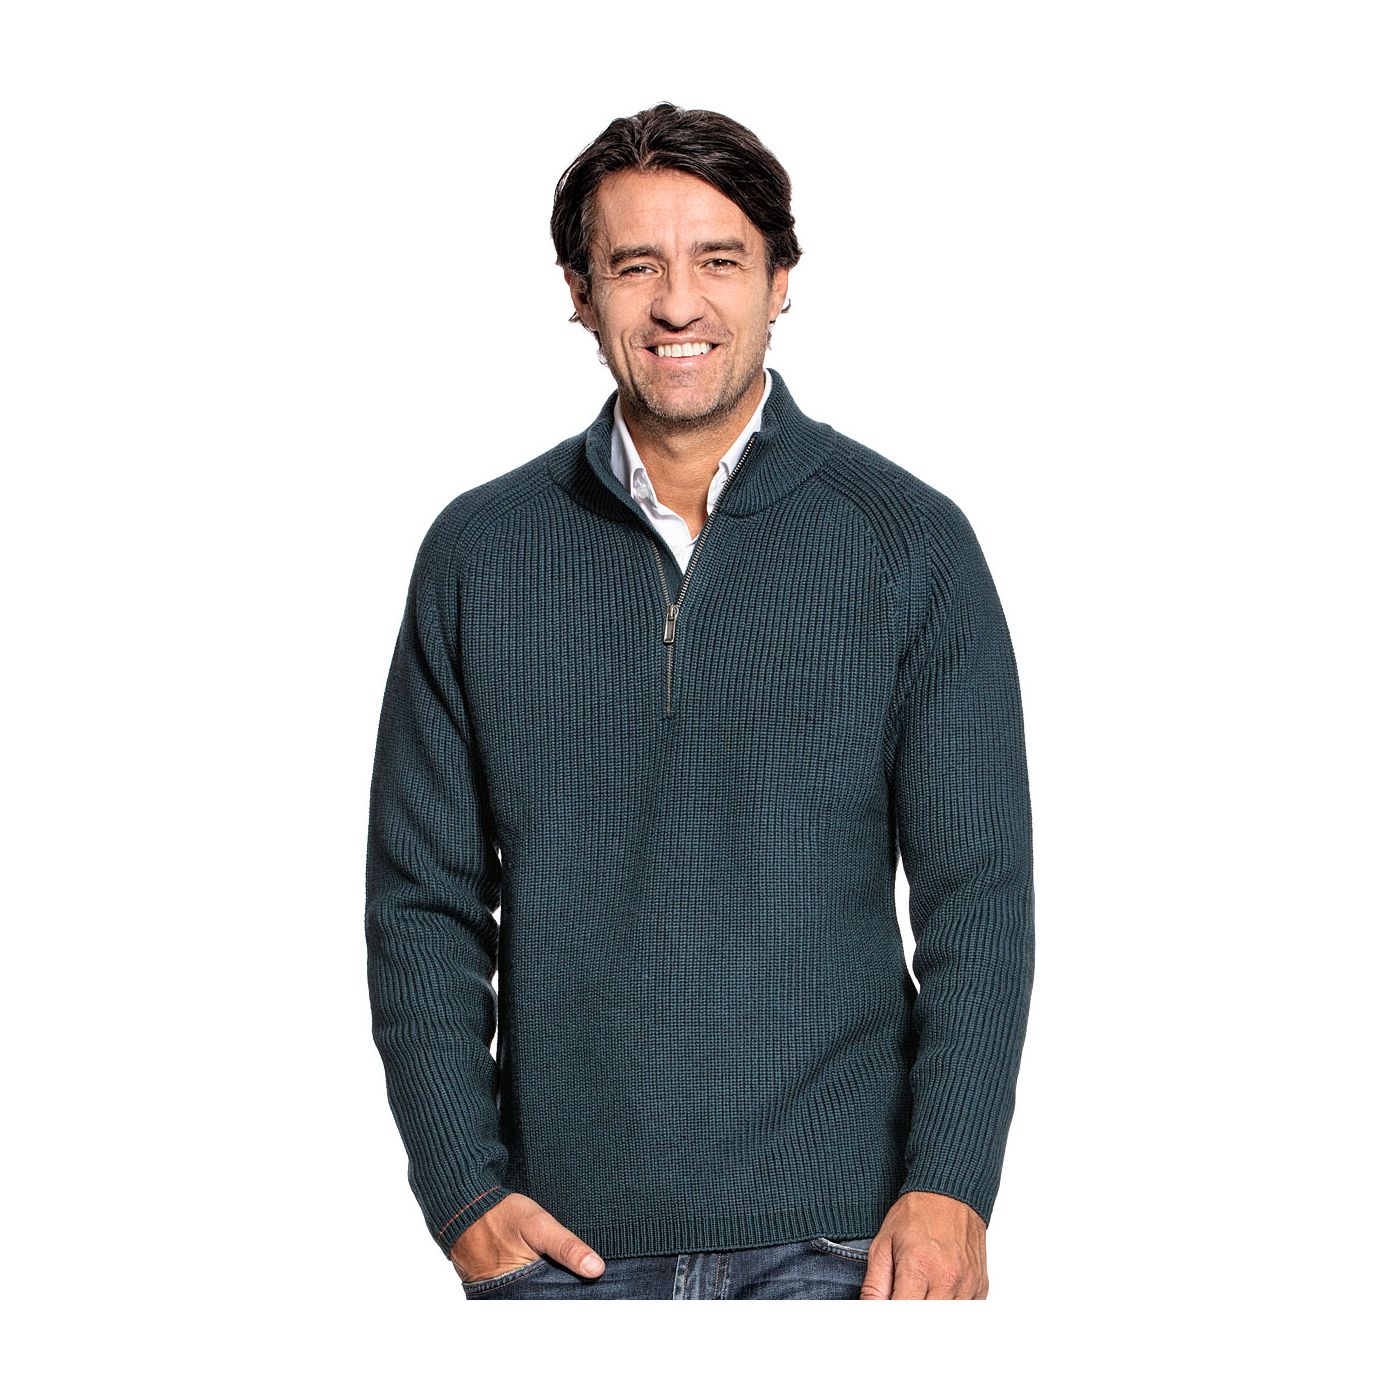 Fisherman sweater for men made of Merino wool in Blue green